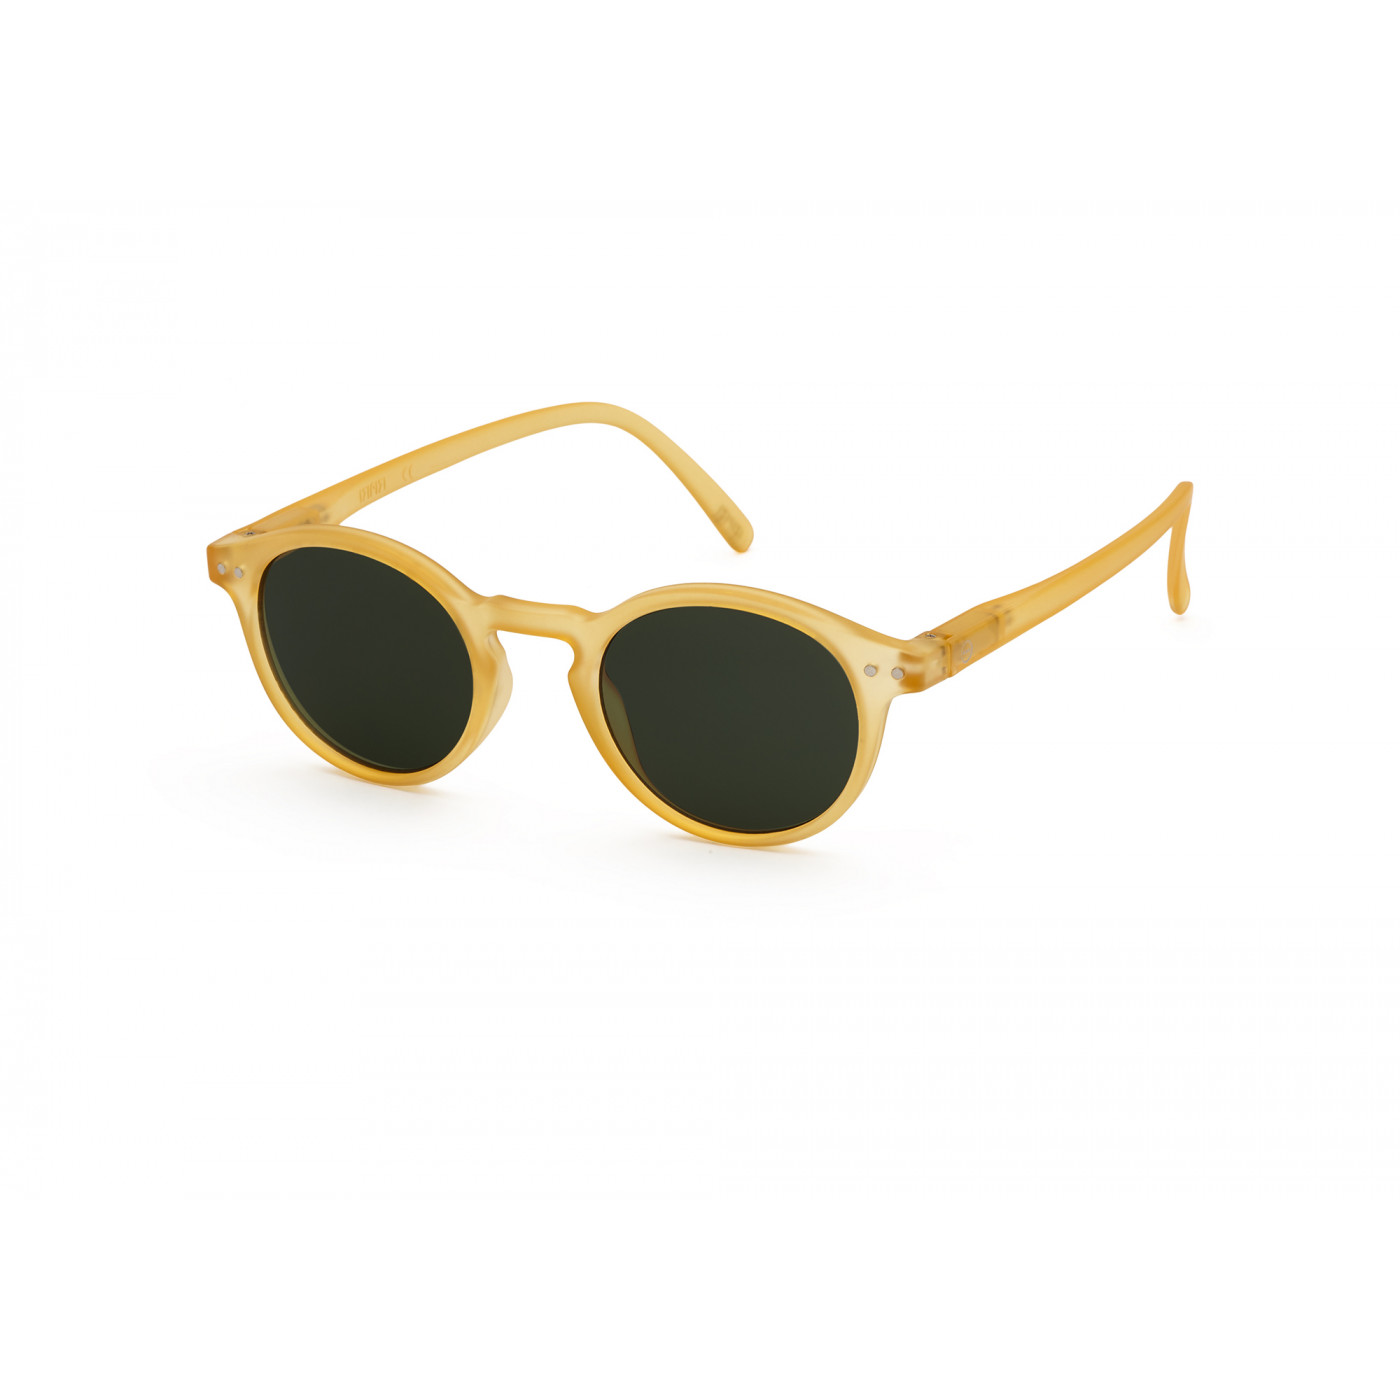 h-sun-yellow-honey-lunettes-soleil (1)